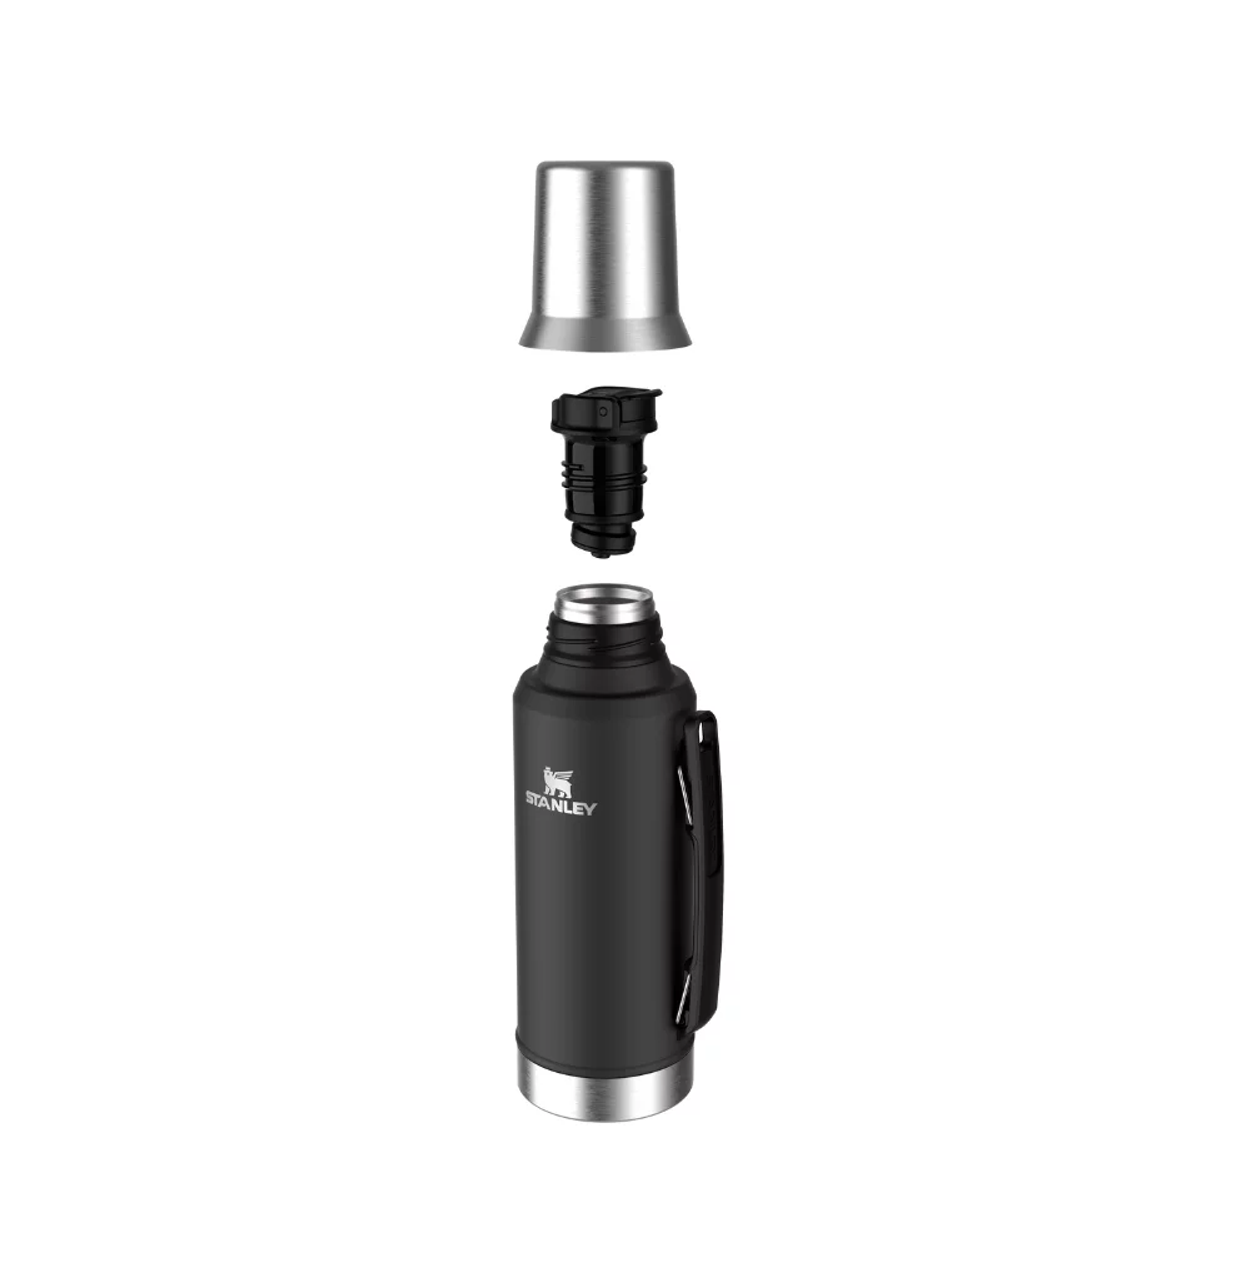 Stanley Mate System Termo Original con Tapón Cebador Thermos Bottle for  Mate Black Colored Design, 1.2 lts / 40.57 fl oz